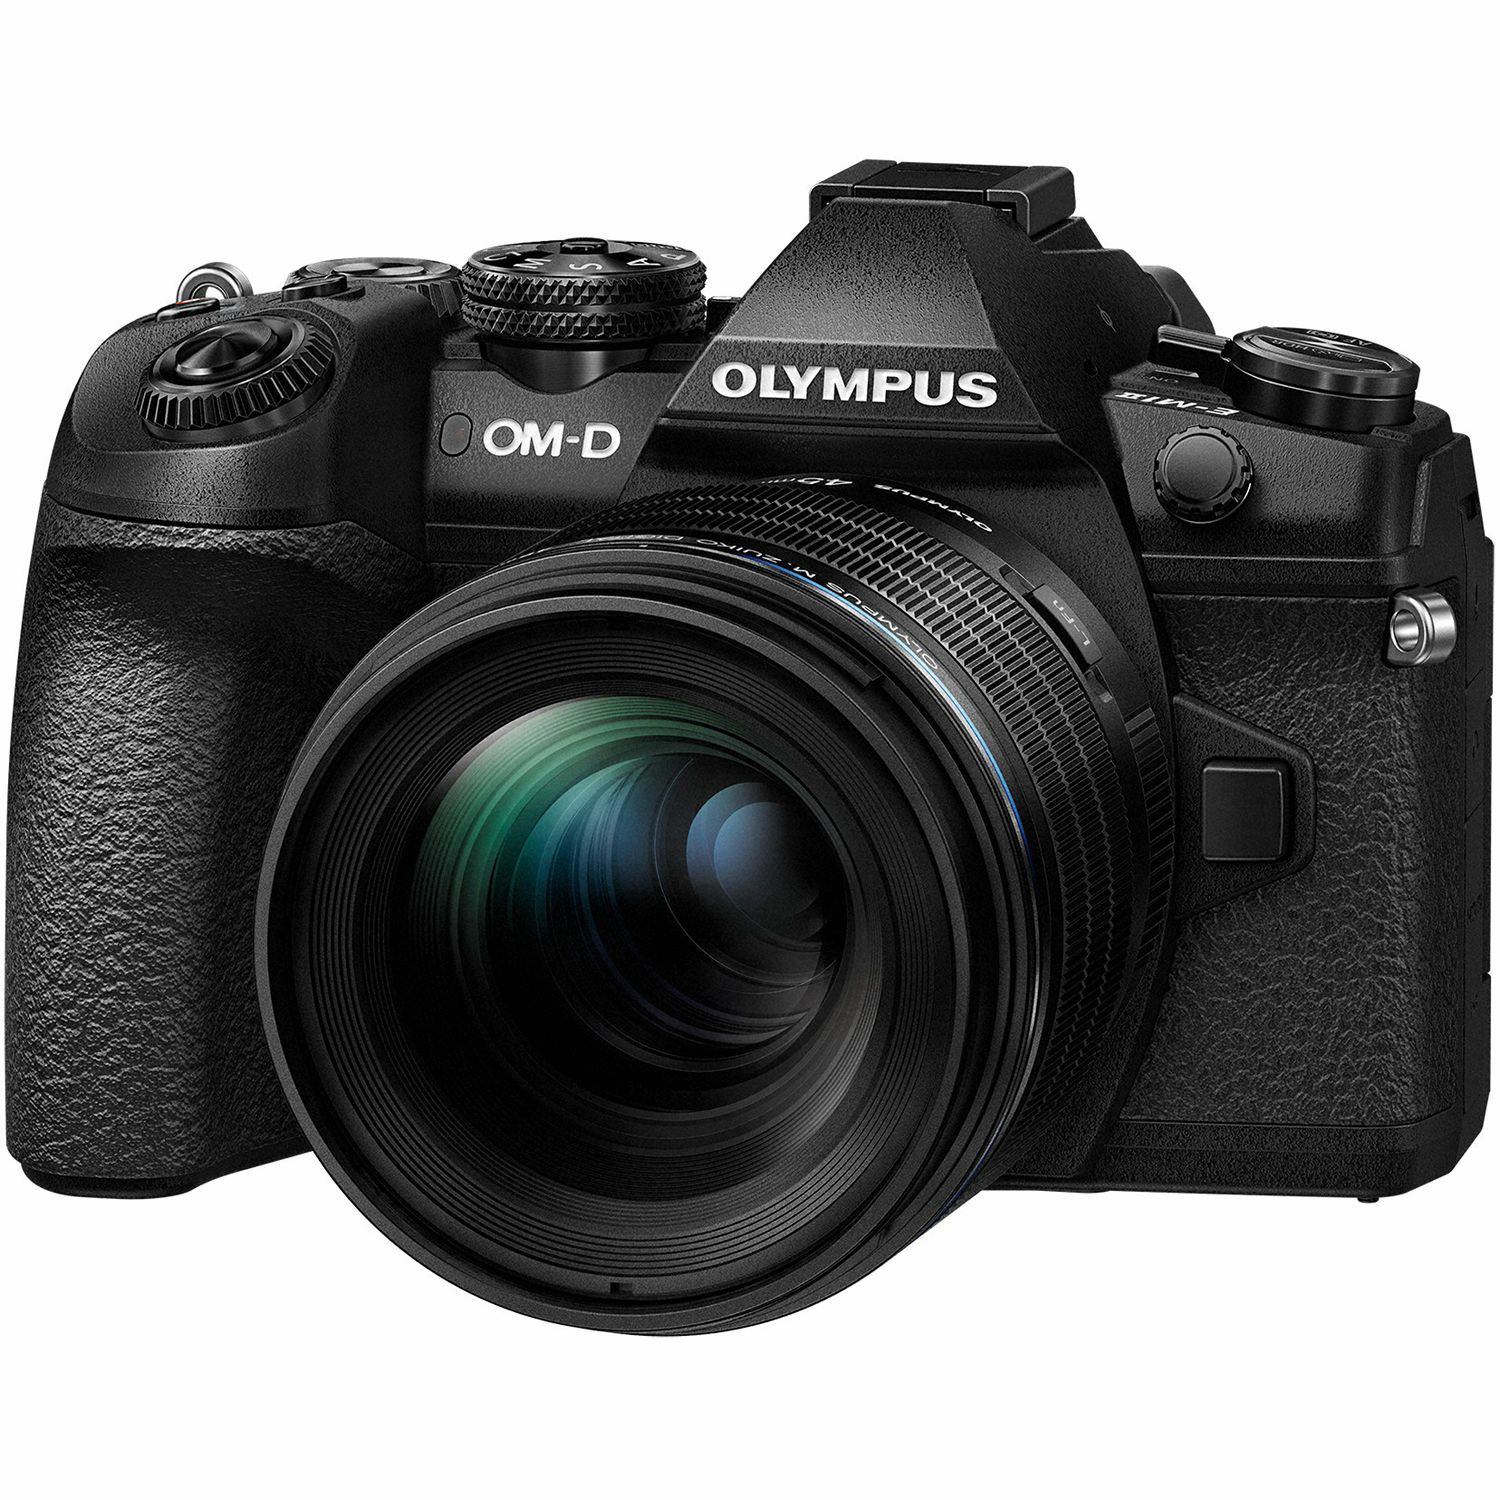 Olympus 45mm f/1.2 ED PRO telefoto objektiv fiksne žarišne duljine M. Zuiko Digital ET-M4512PRO 1:1.2 f1.2 1.2 prime lens Micro Four Thirds MFT micro4/3" (V311090BW000)